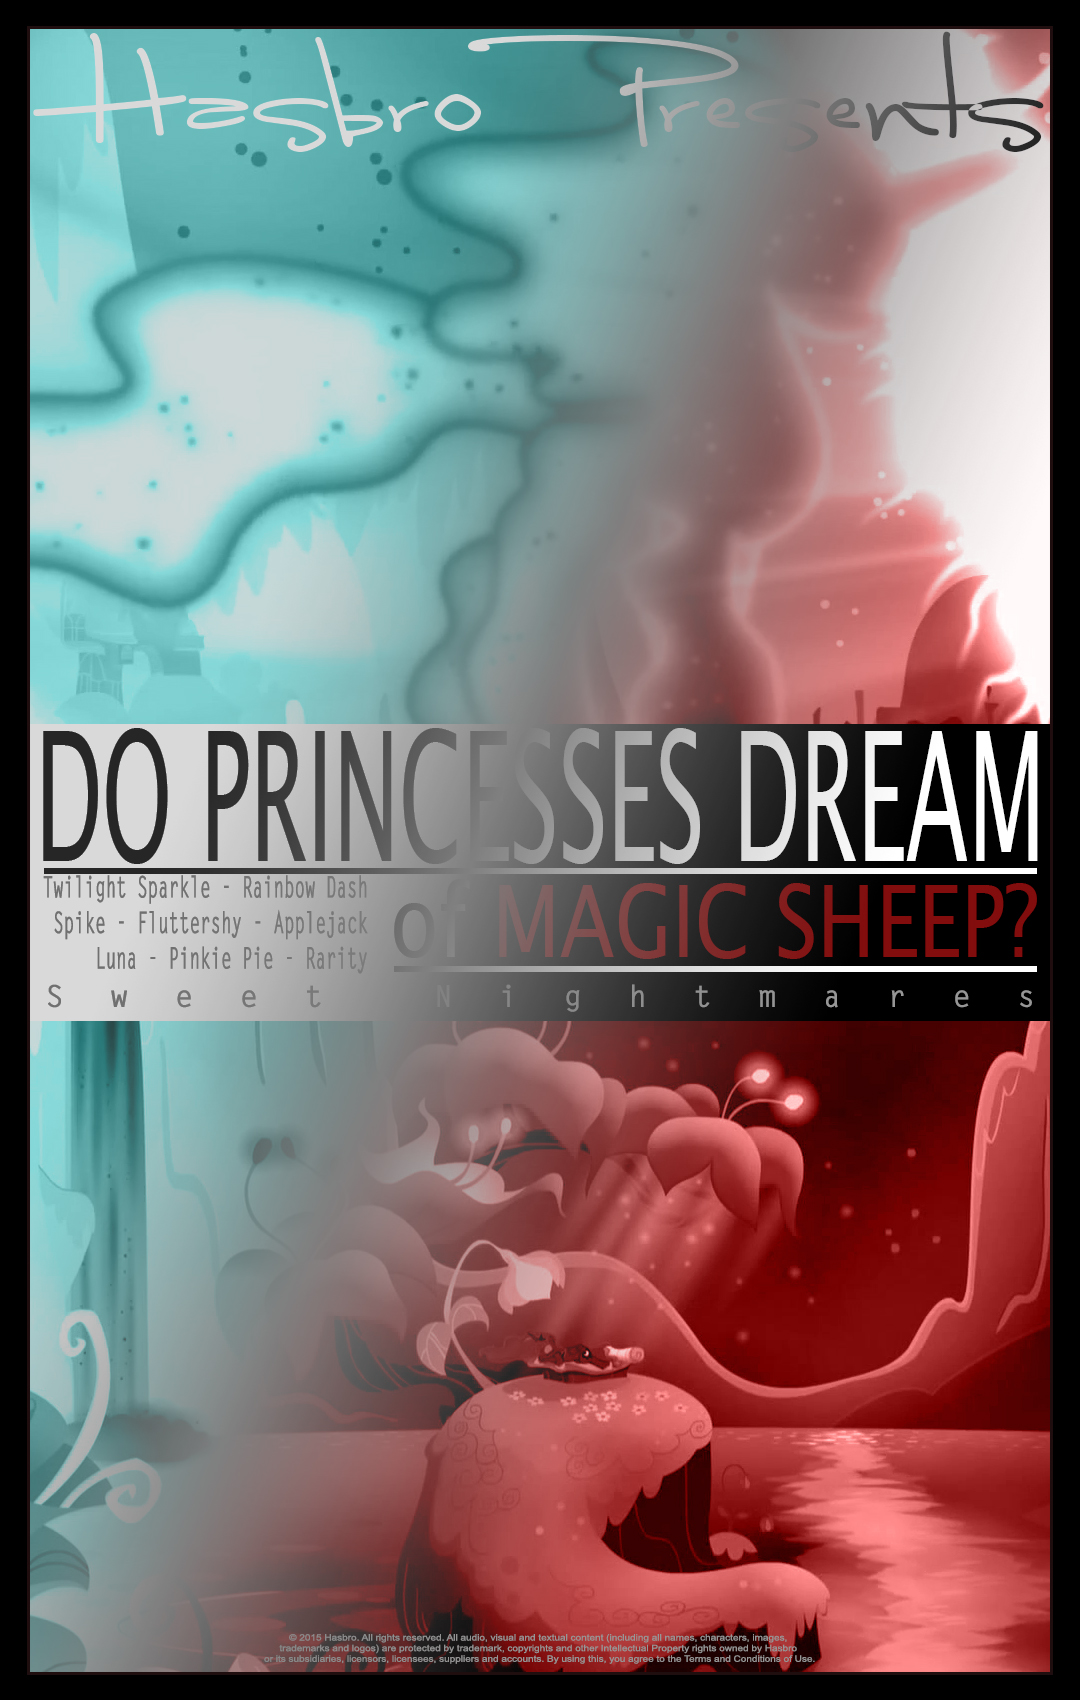 mlp_do_princesses_dream_of_magic_sheep_movieposter_by_pims1978-d90yg3f.jpg